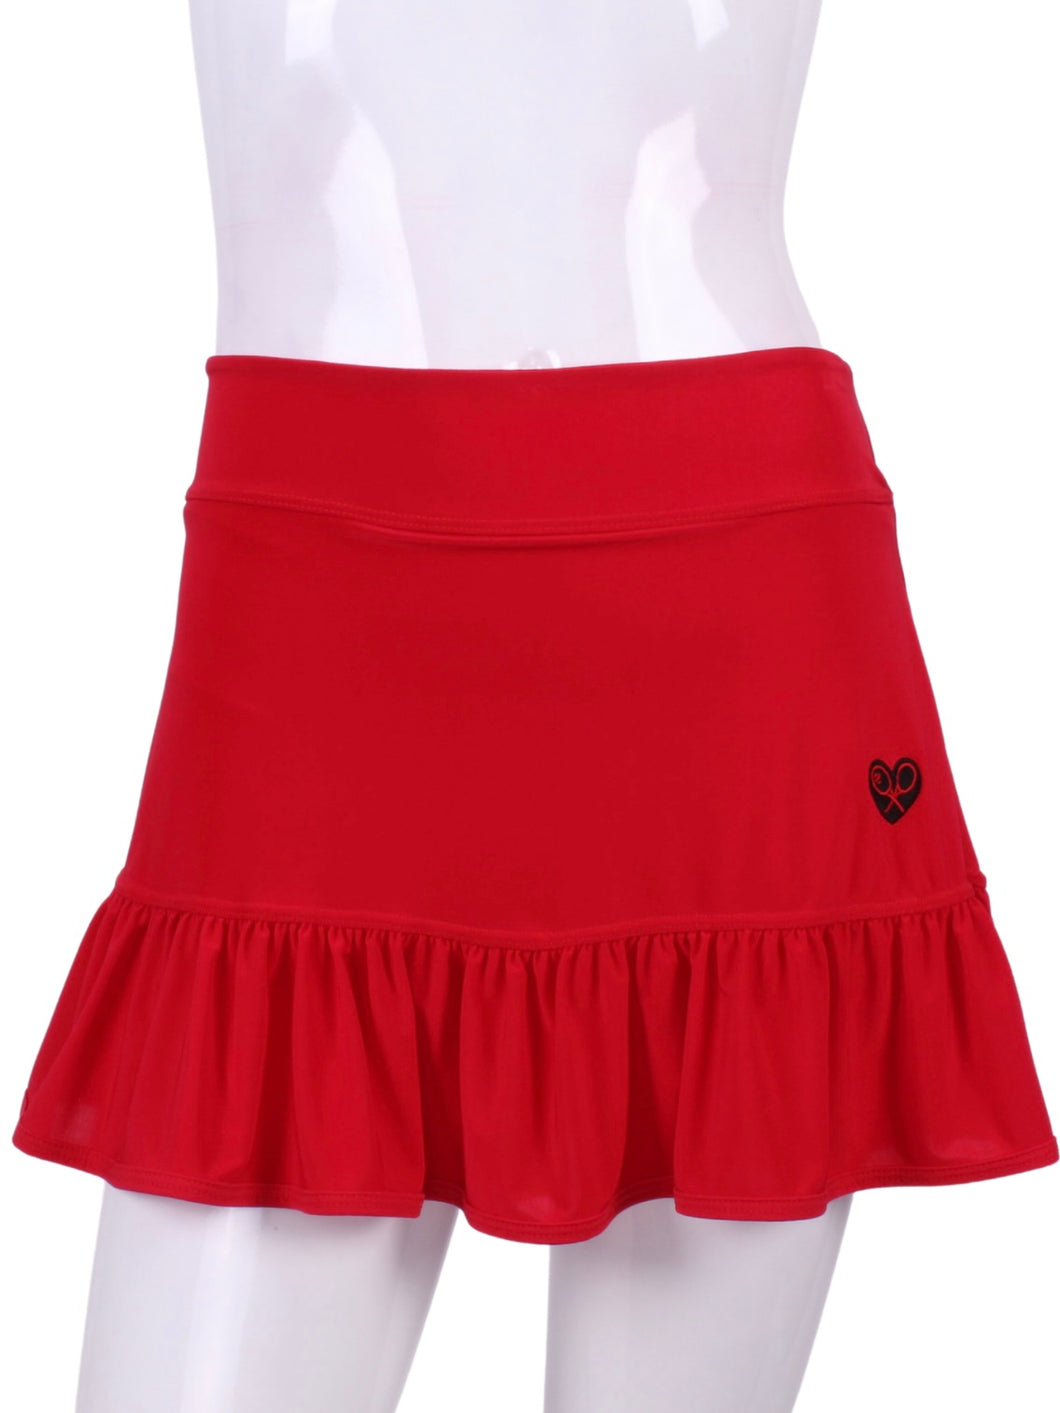 Red Ruffle Skirt - I LOVE MY DOUBLES PARTNER!!!